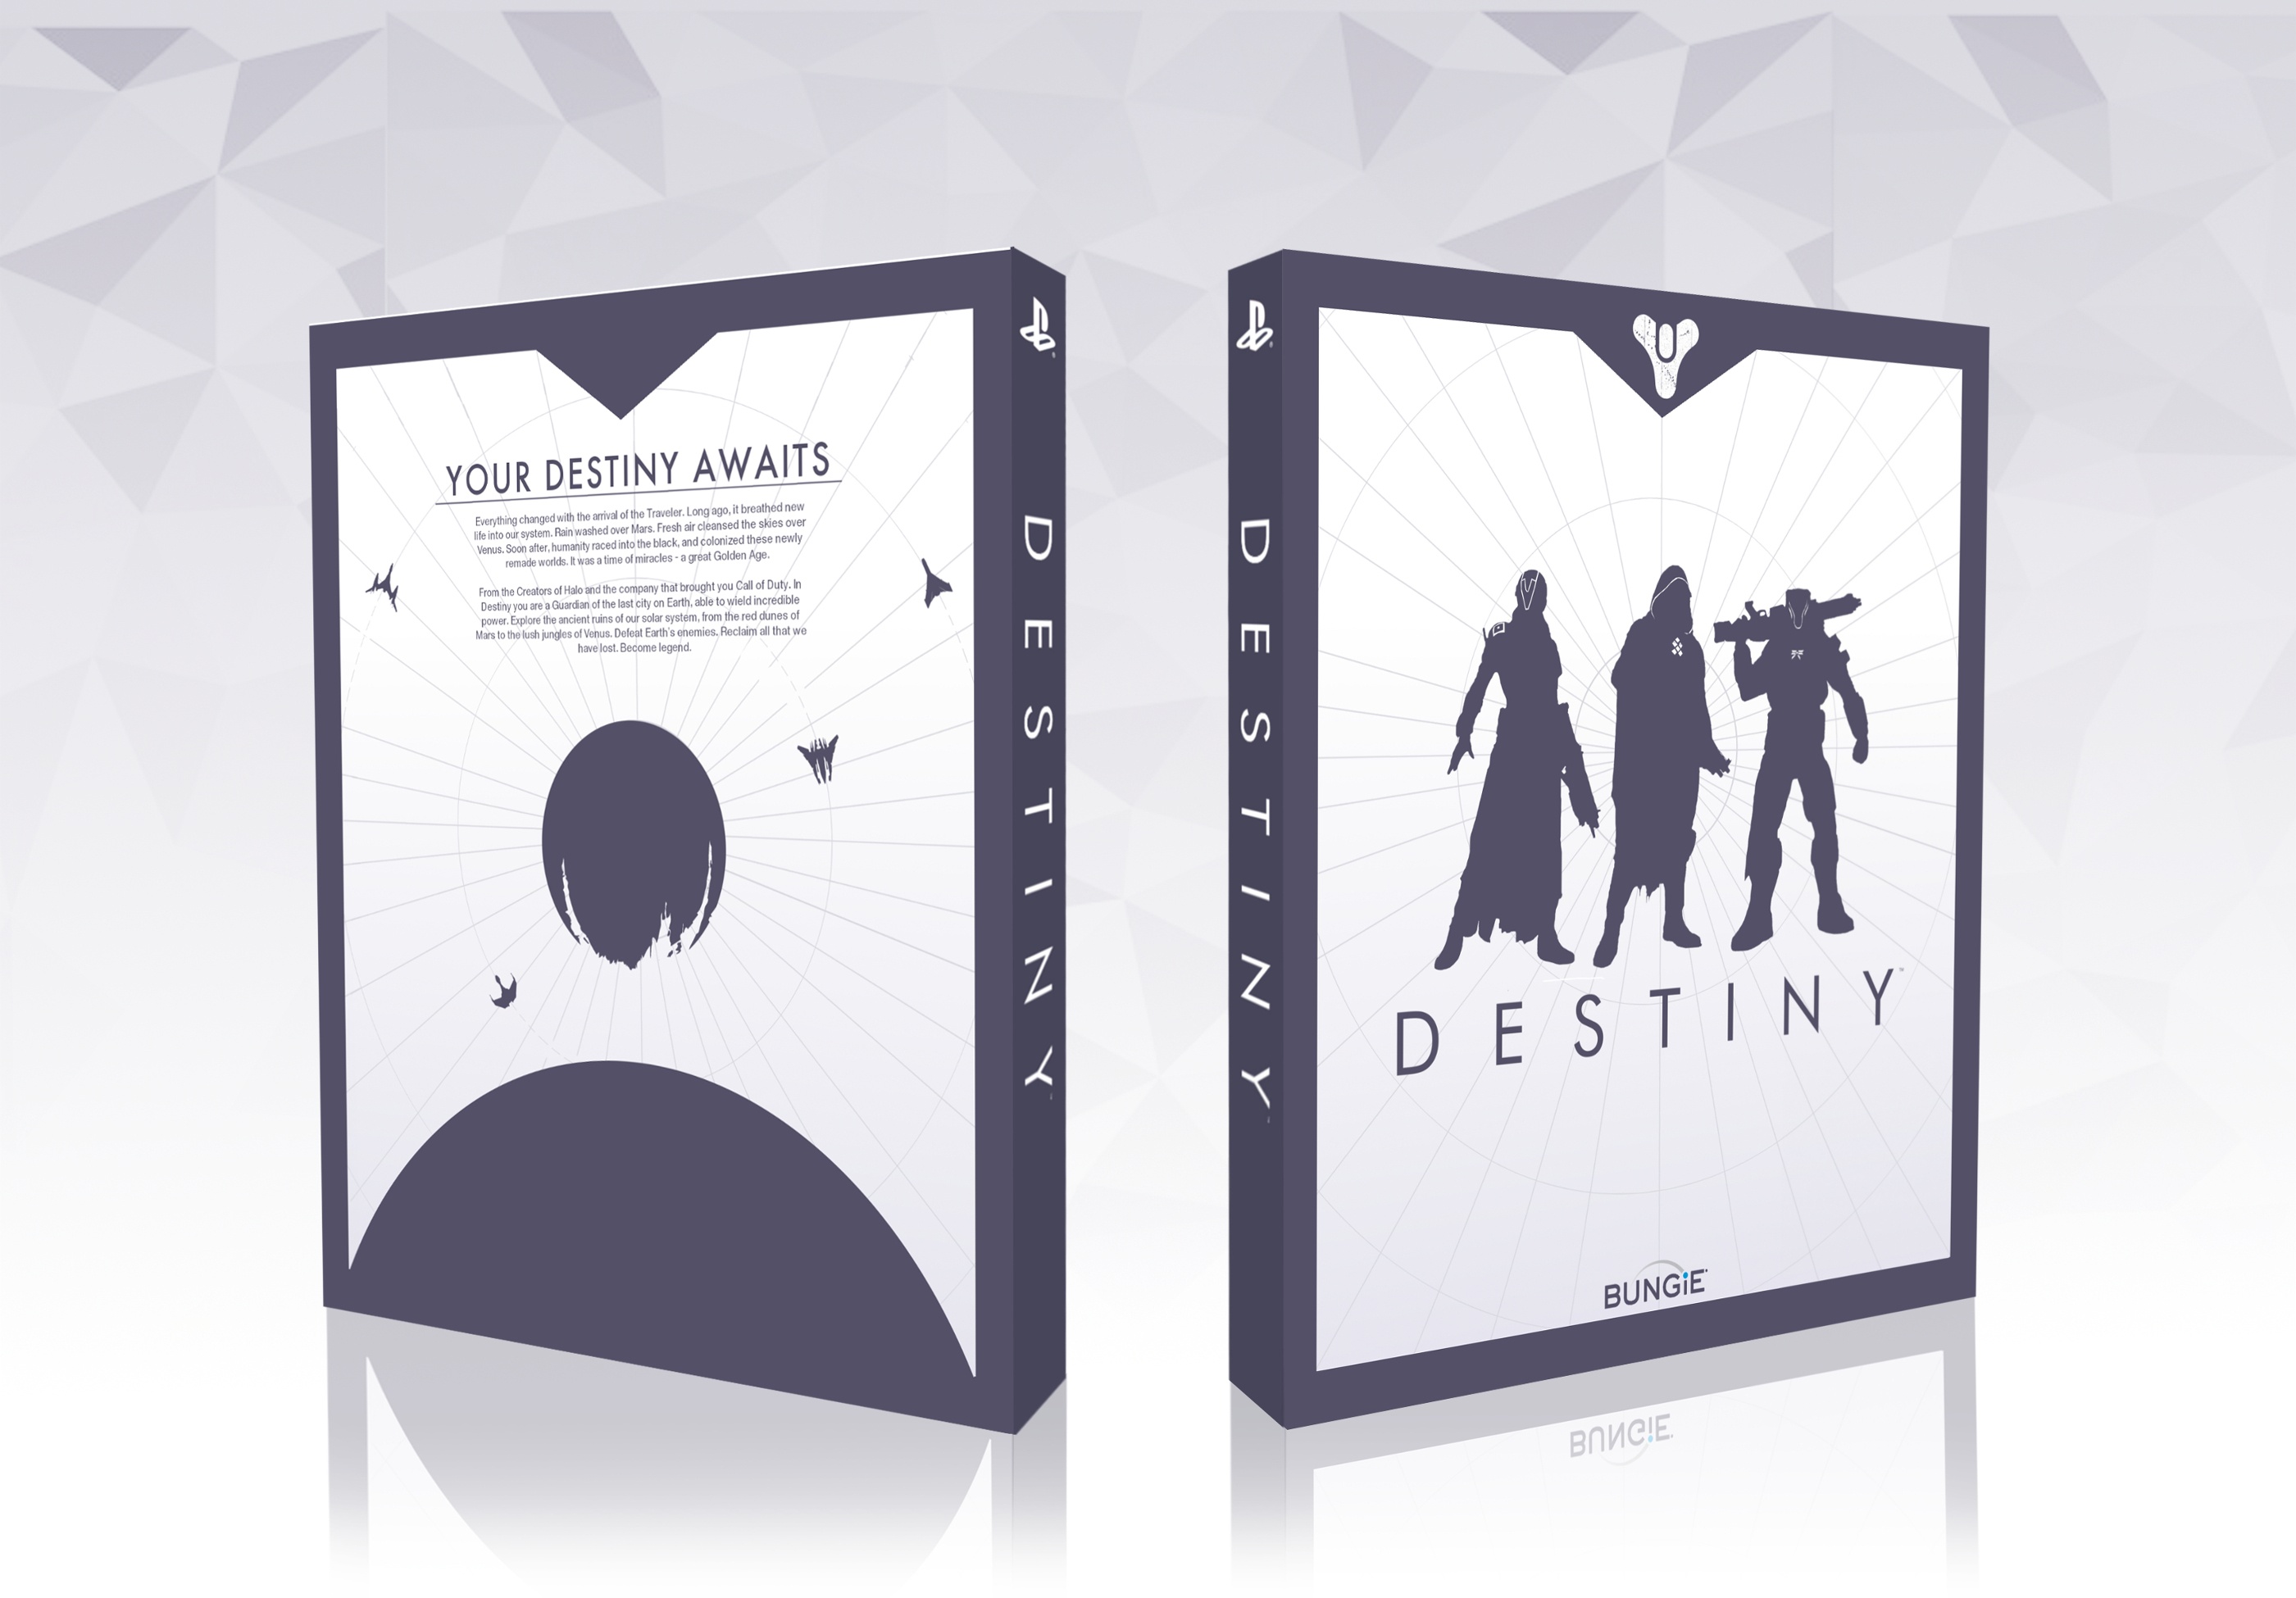 Destiny box cover